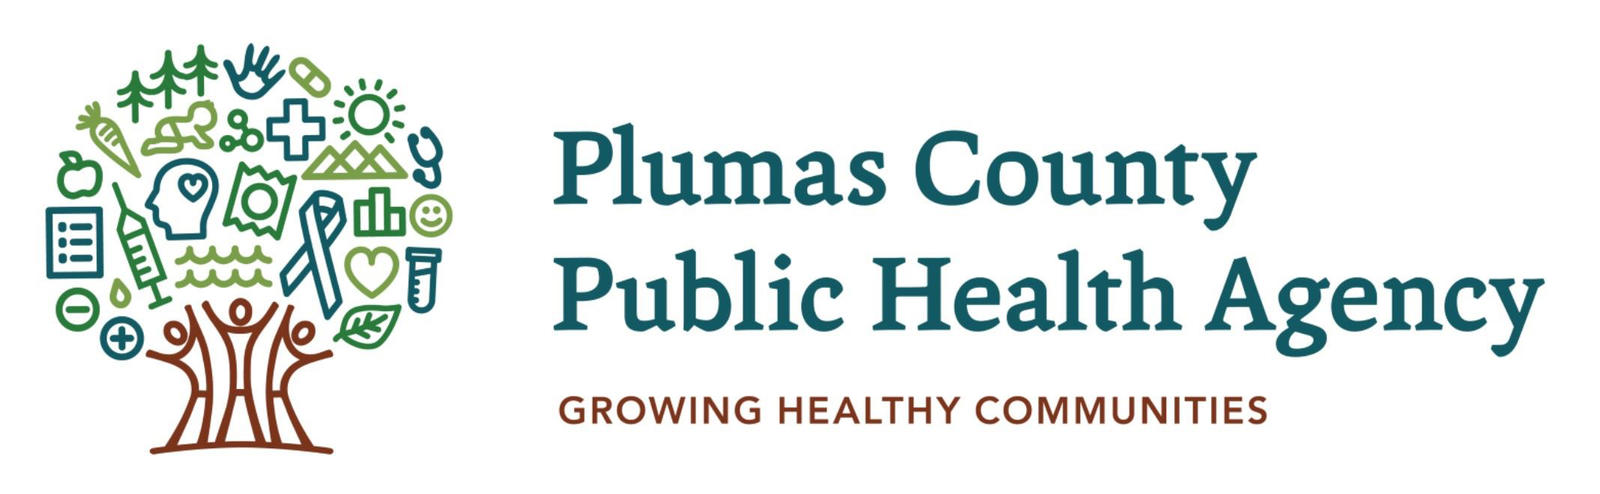 Plumas county public health agency